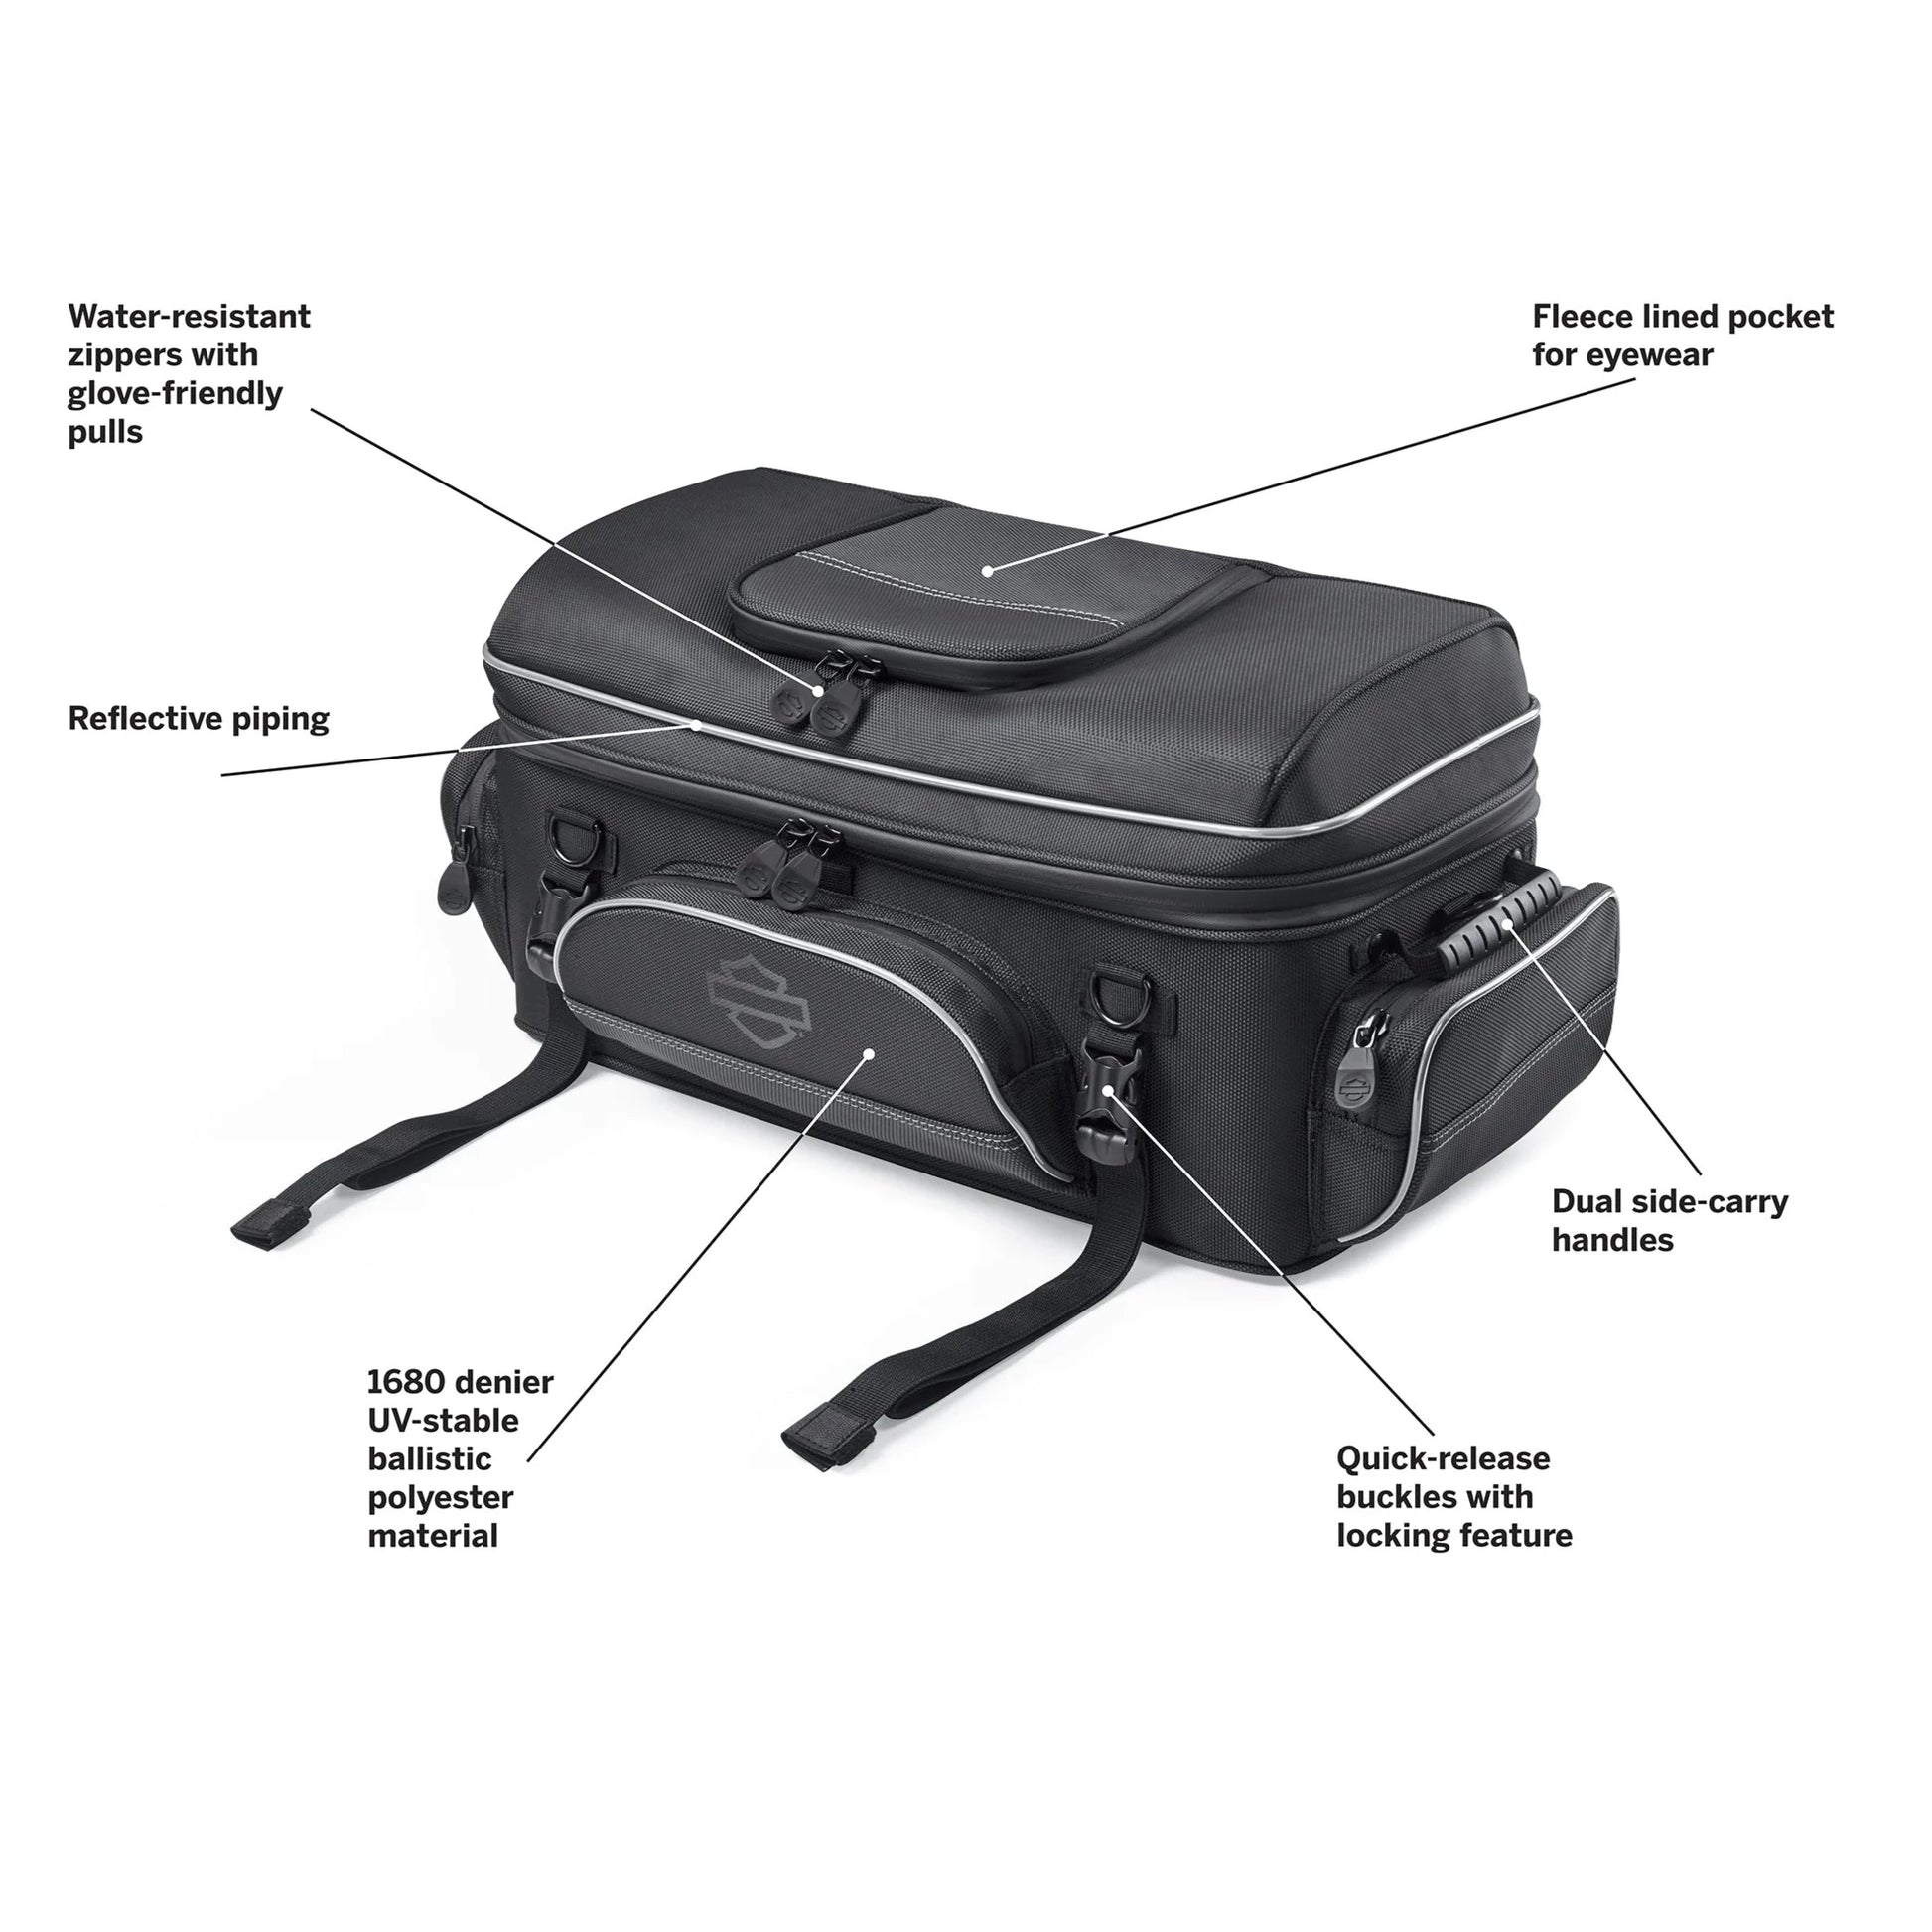 Harley-Davidson Onyx Premium Luggage Tour-Pak Rack Bag - 93300123 features